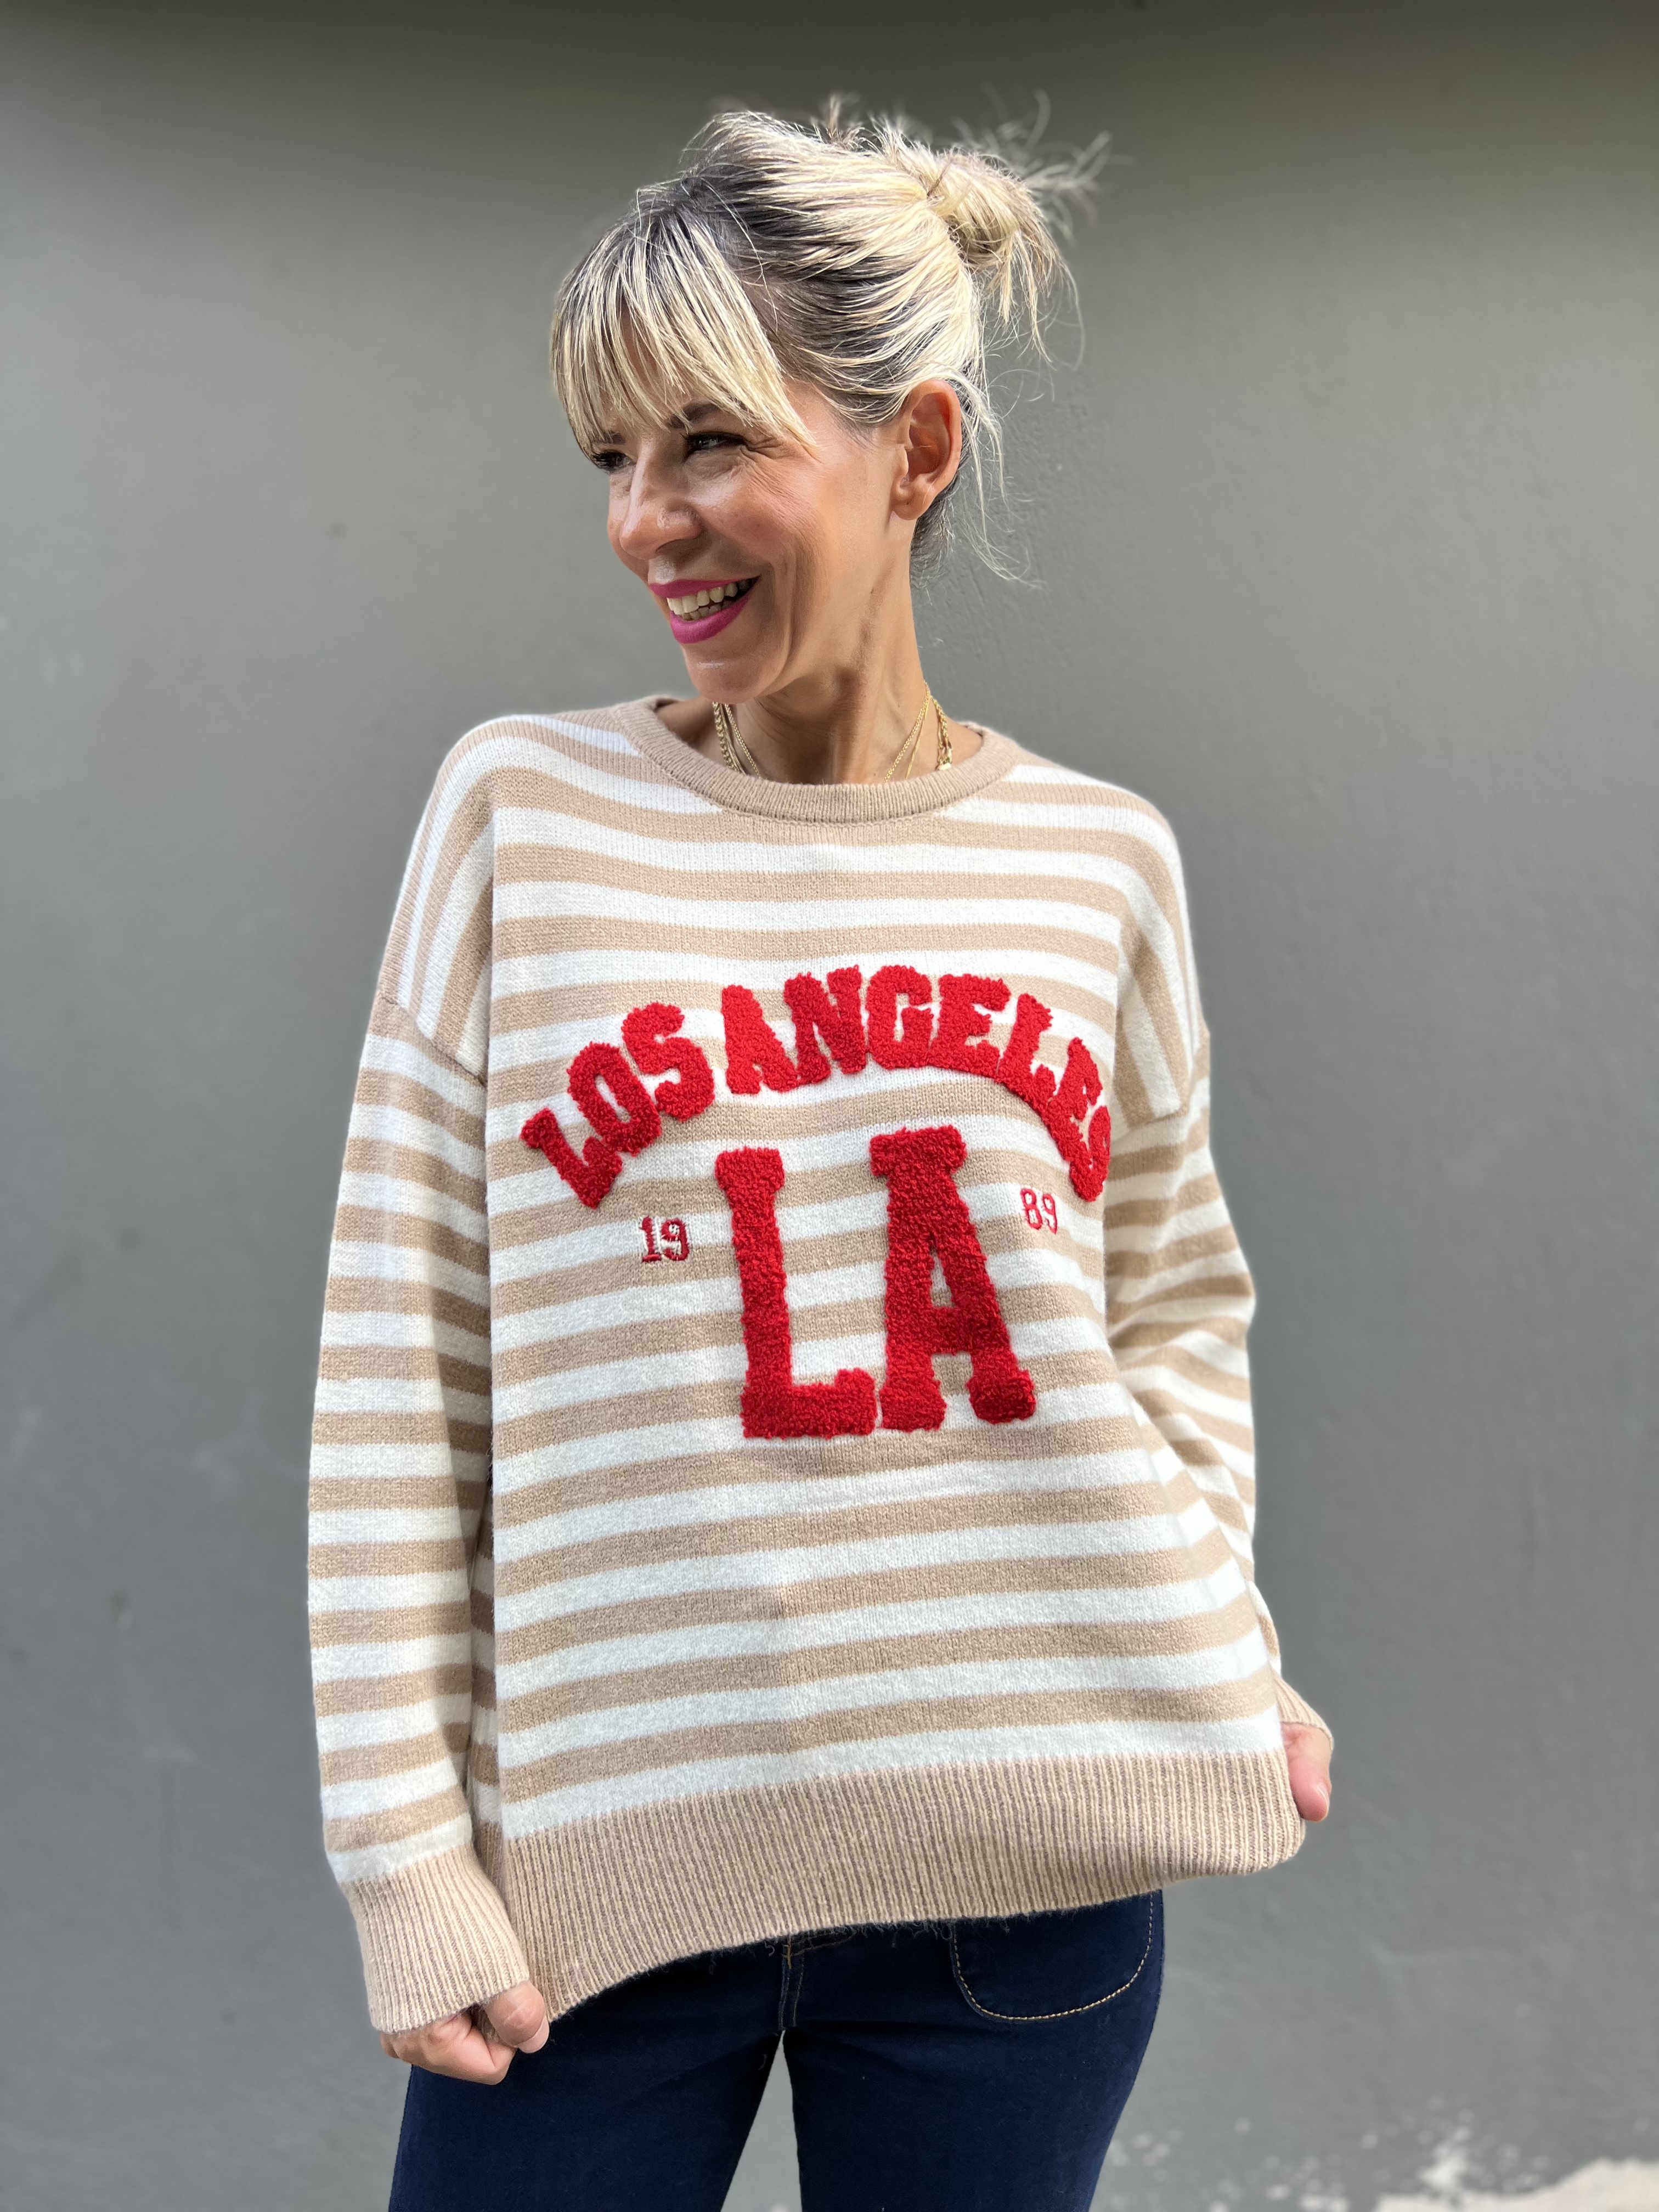 Los Angeles Beige sweater 